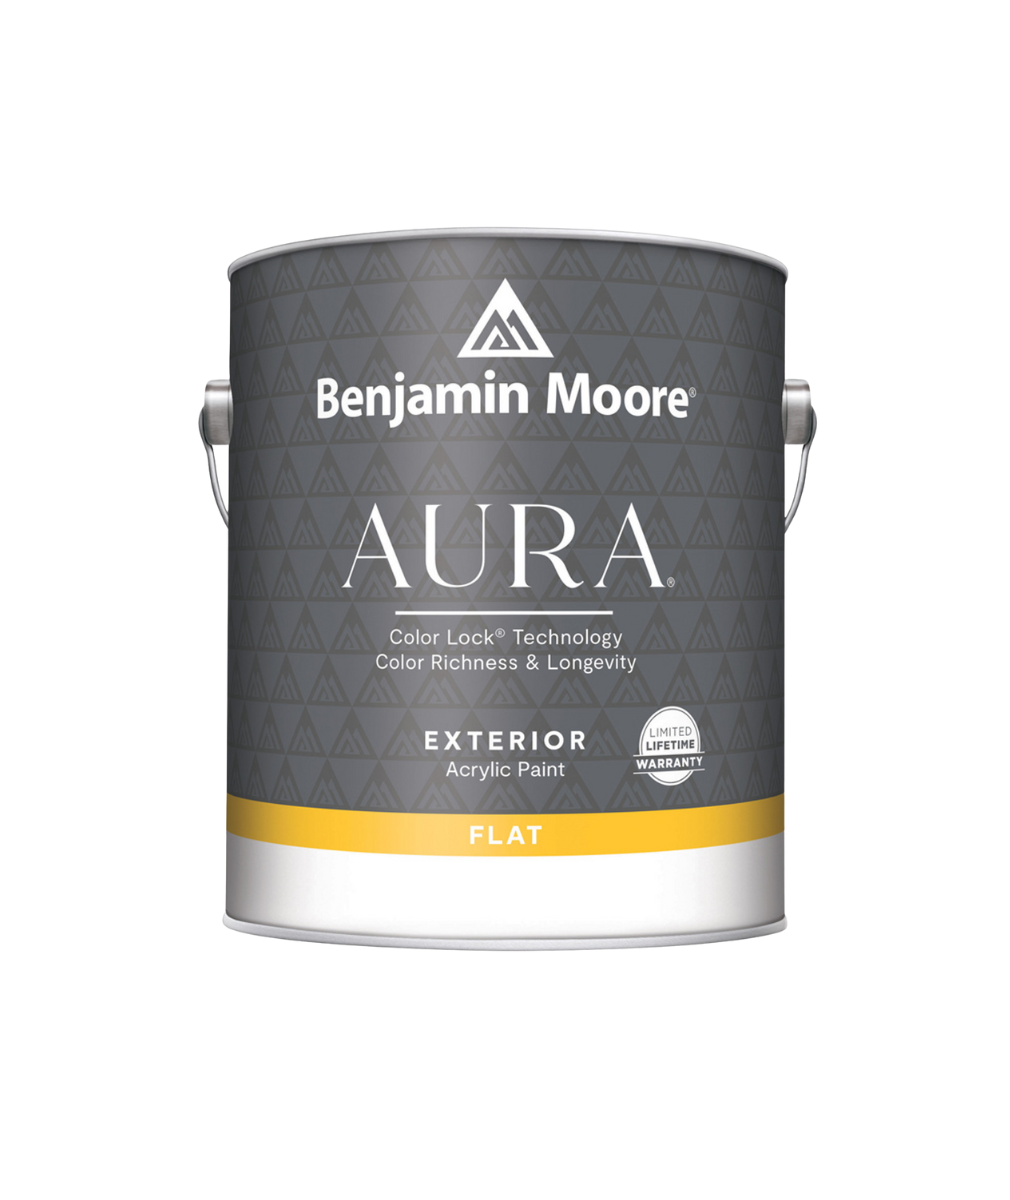 Benjamin Moore Aura Exterior Flat available at Southwestern Paint.